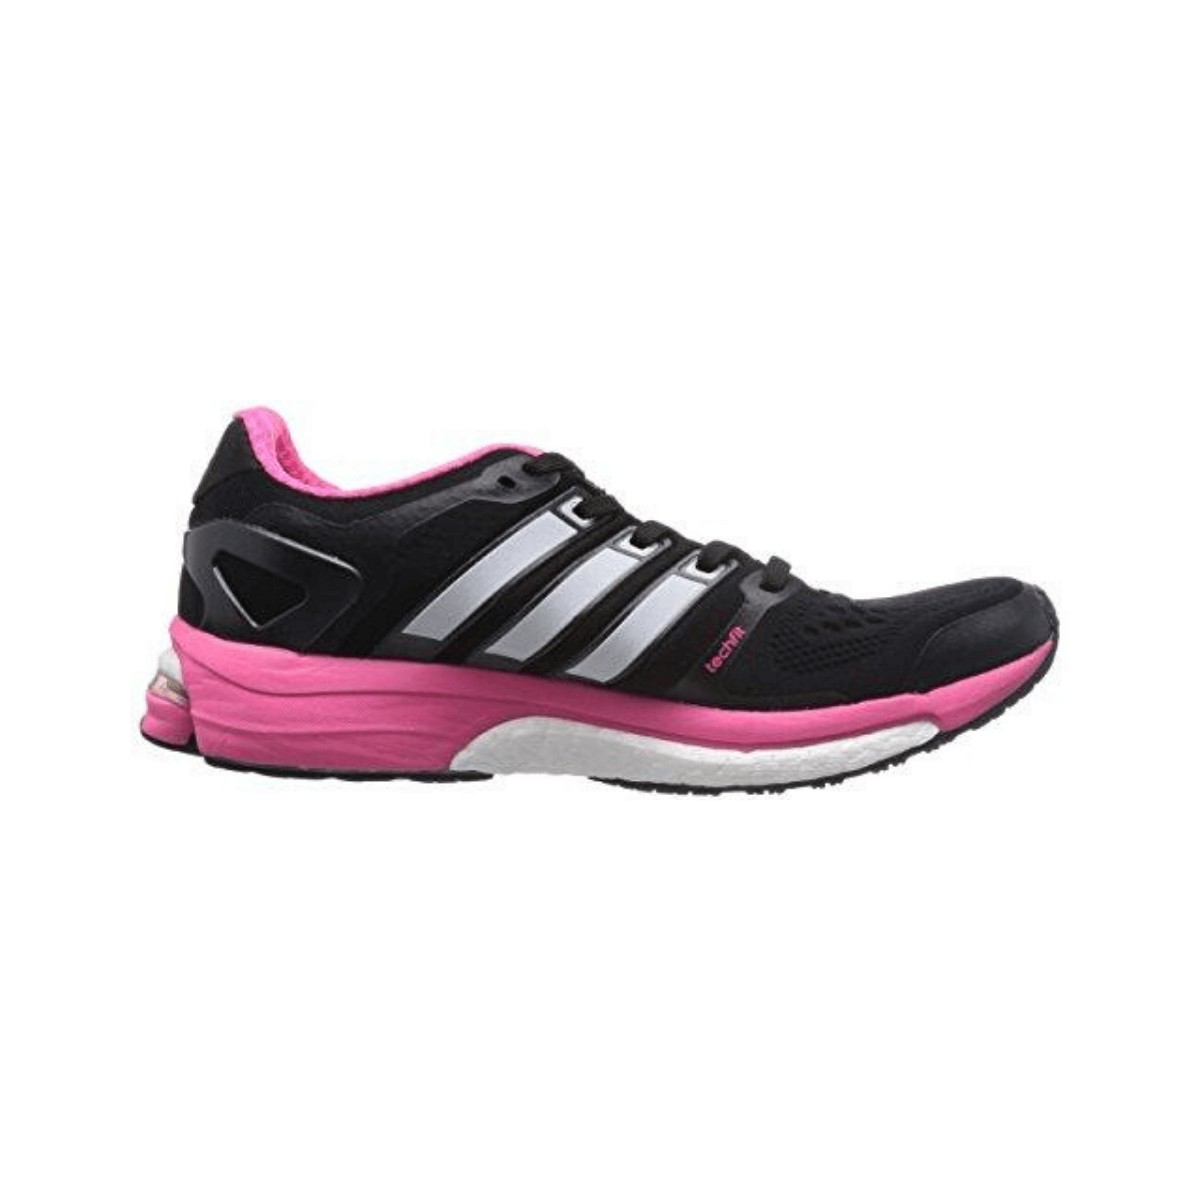 Adidas Adistar Boost ESM Black Pink Women's Shoes